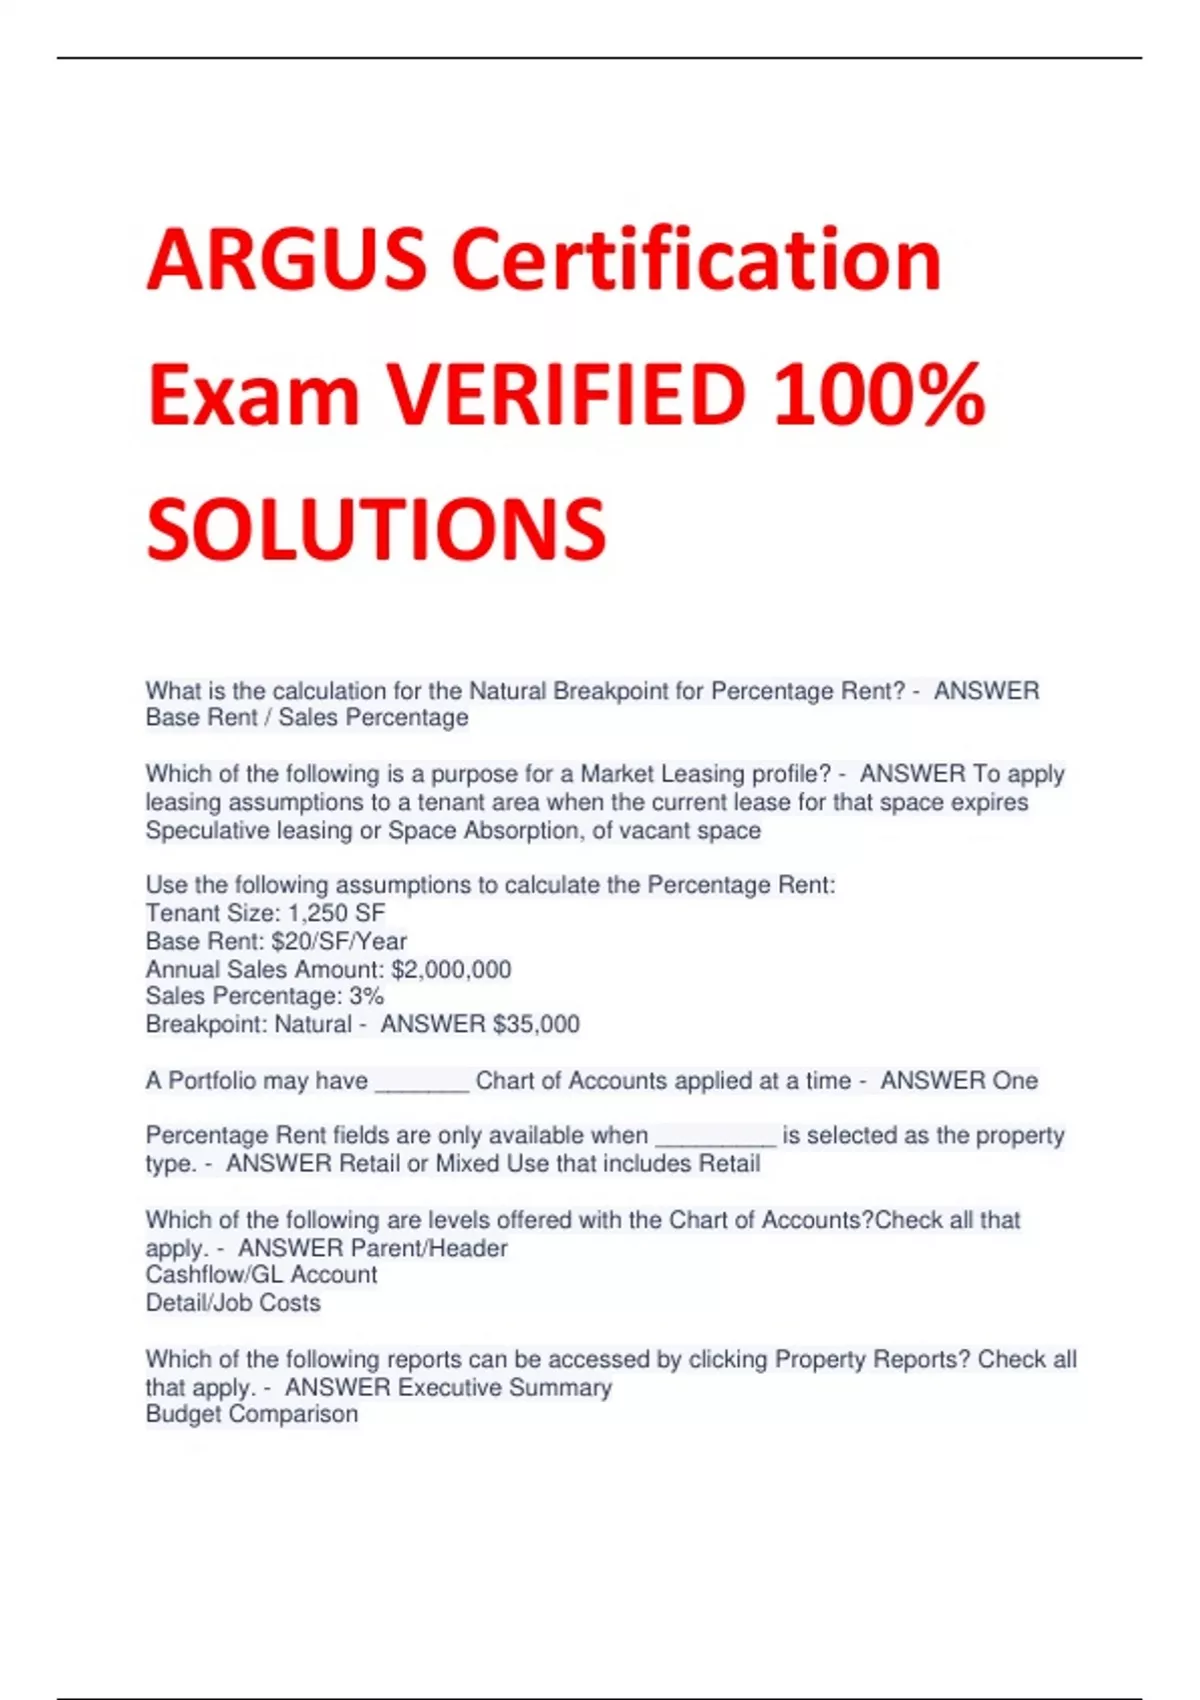 ARGUS Certification Exam VERIFIED 100% SOLUTIONS Stuvia US